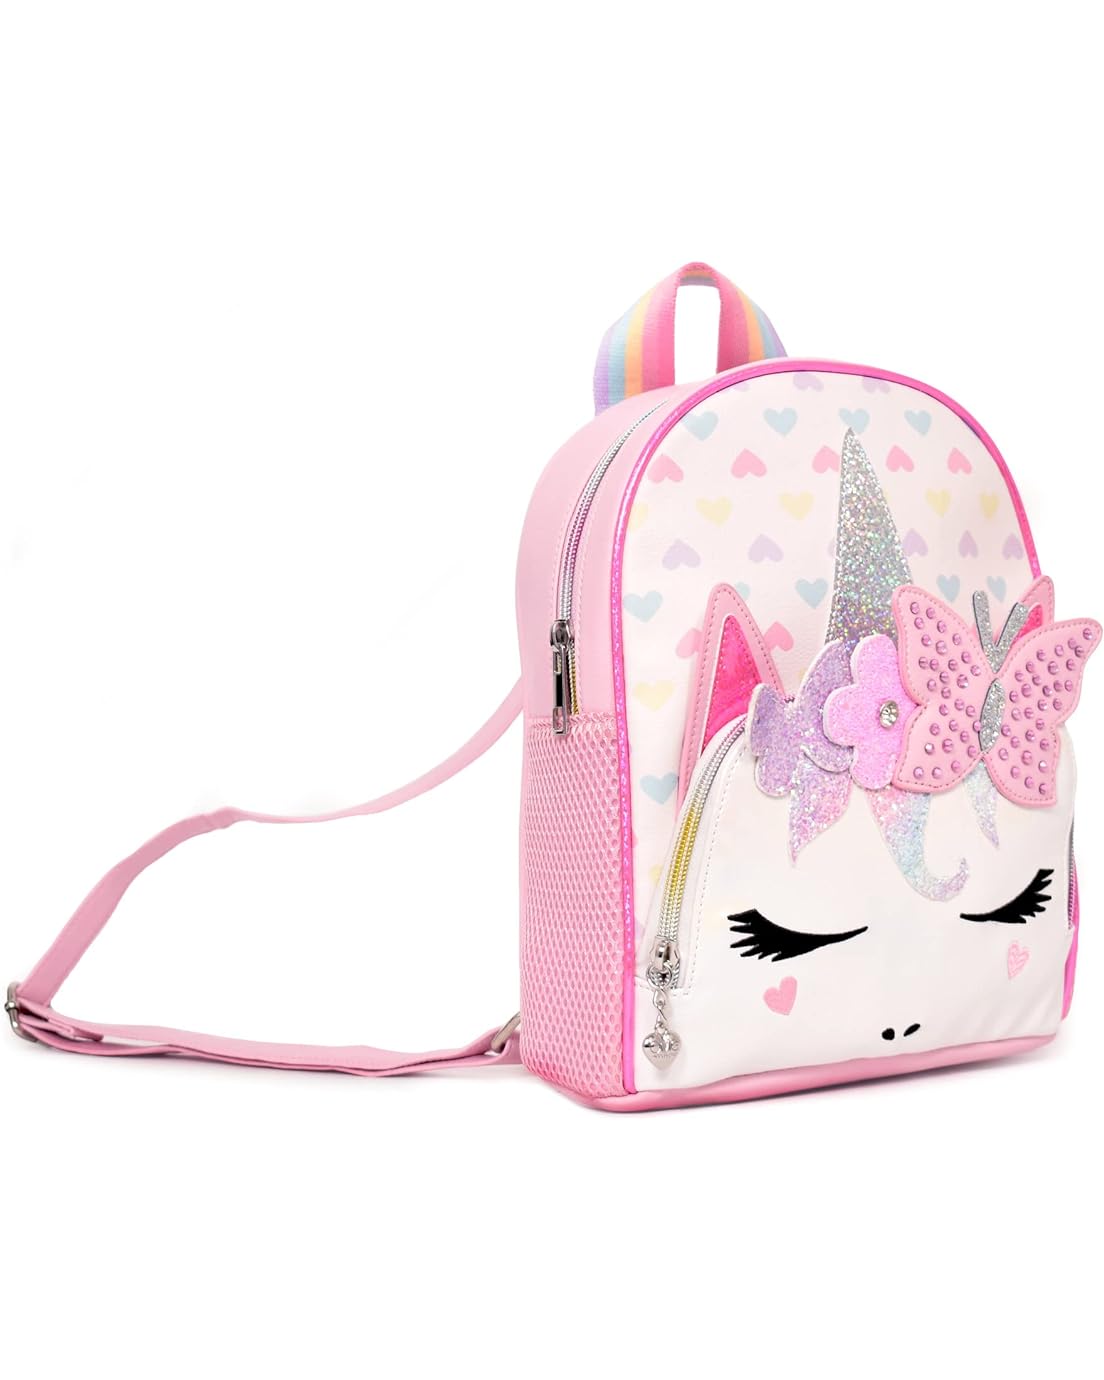  Miss Gwen’s OMG Accessories Pastel Heart Butterfly Crown Mini Backpack